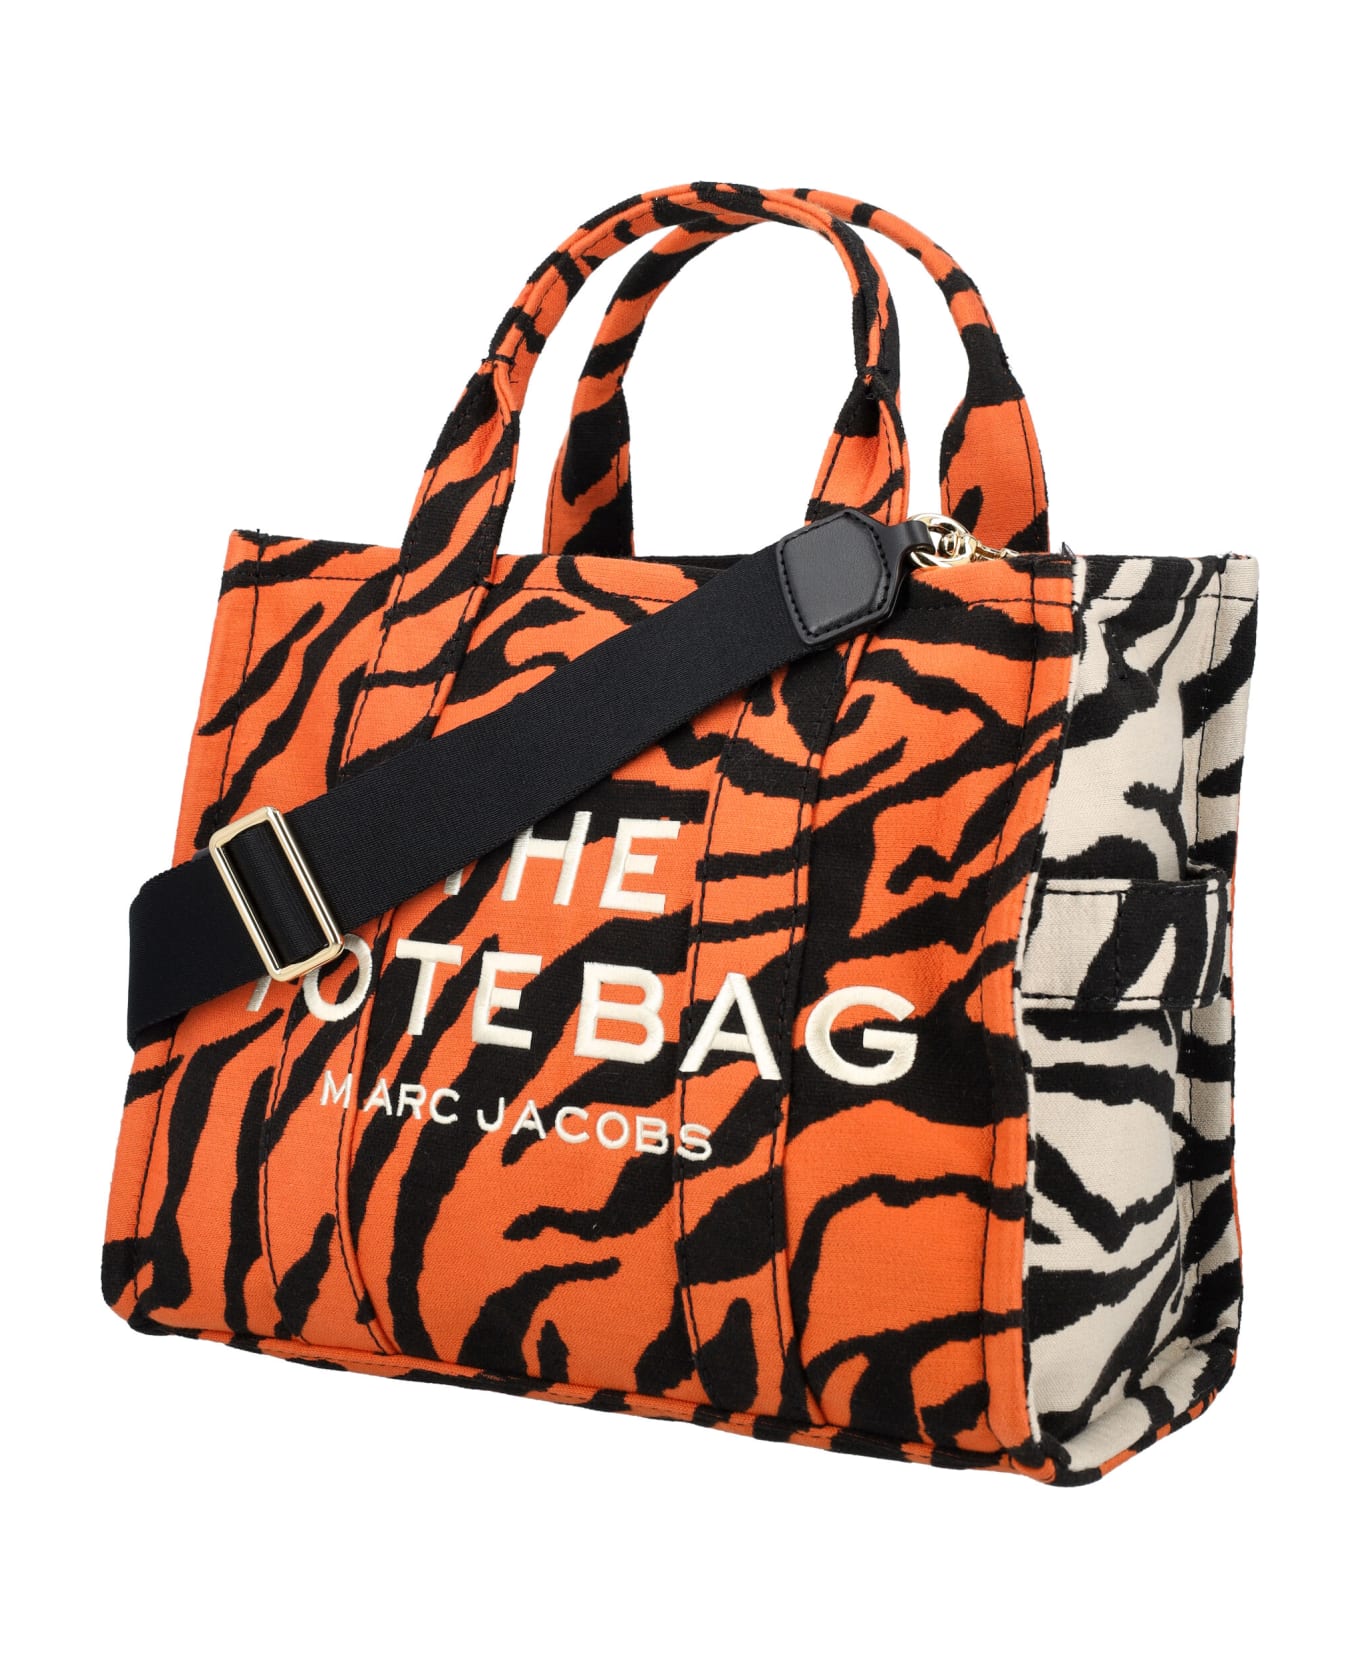 Marc Jacobs Orange Tiger Stripe Small Tote Bag